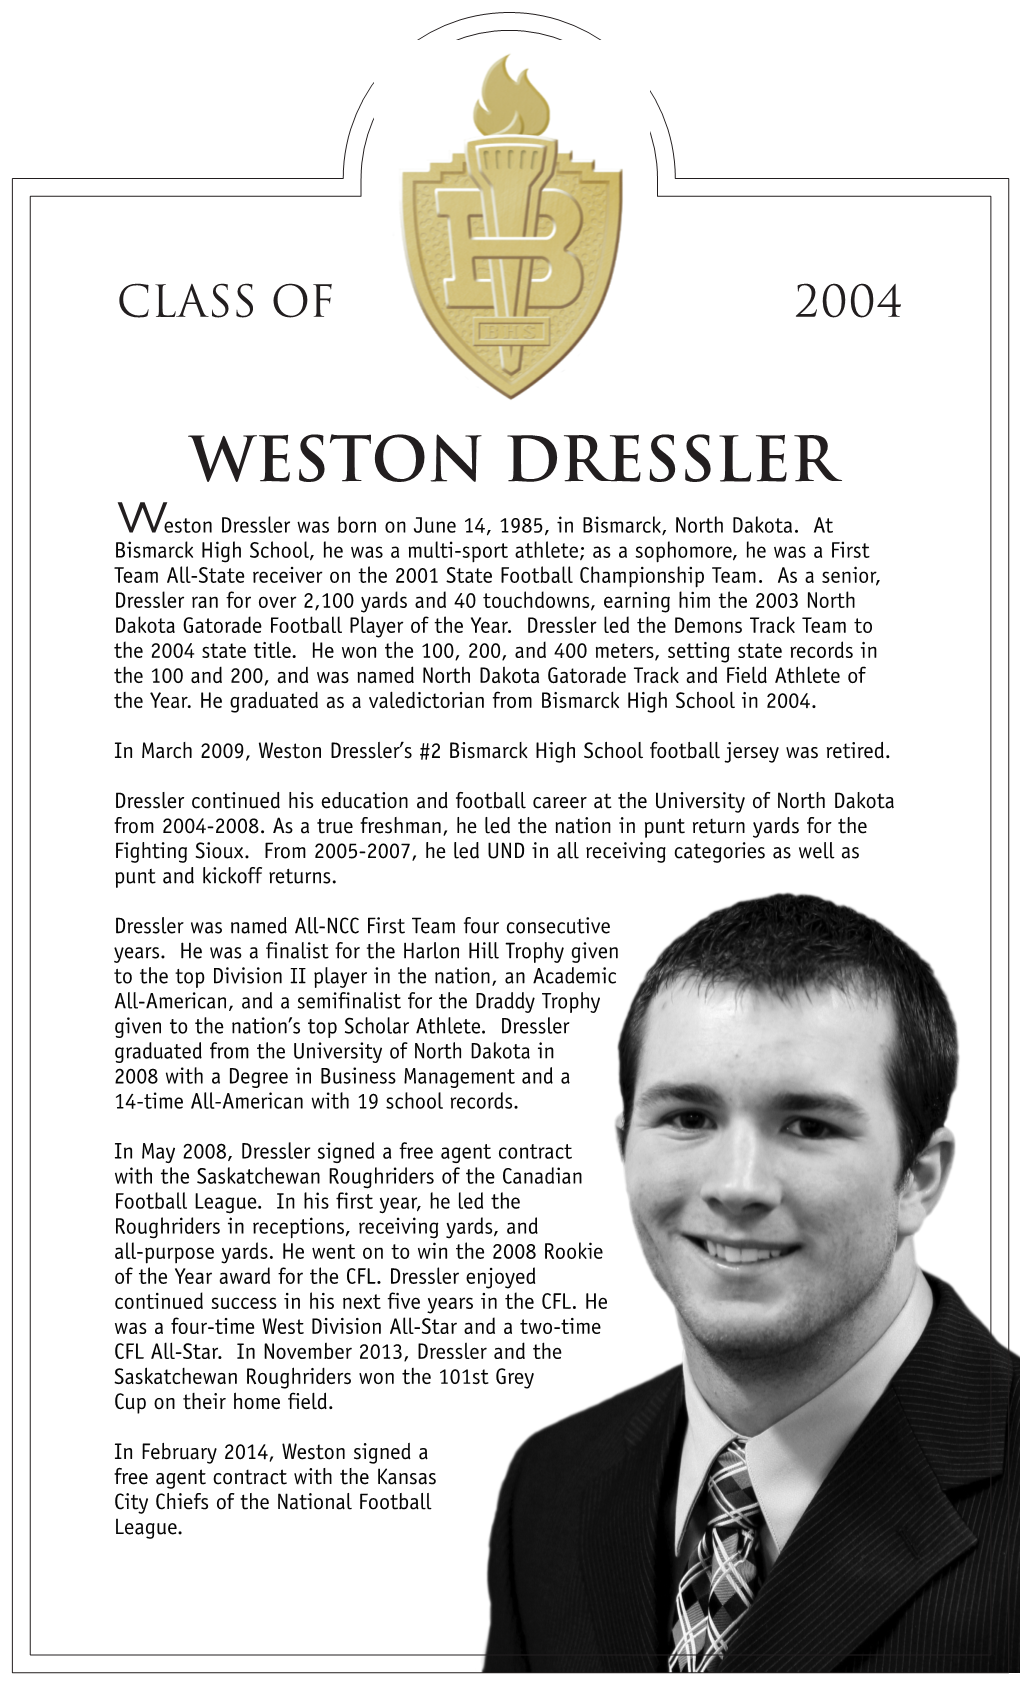 Weston Dressler Weston Dressler Was Born on June 14, 1985, in Bismarck, North Dakota